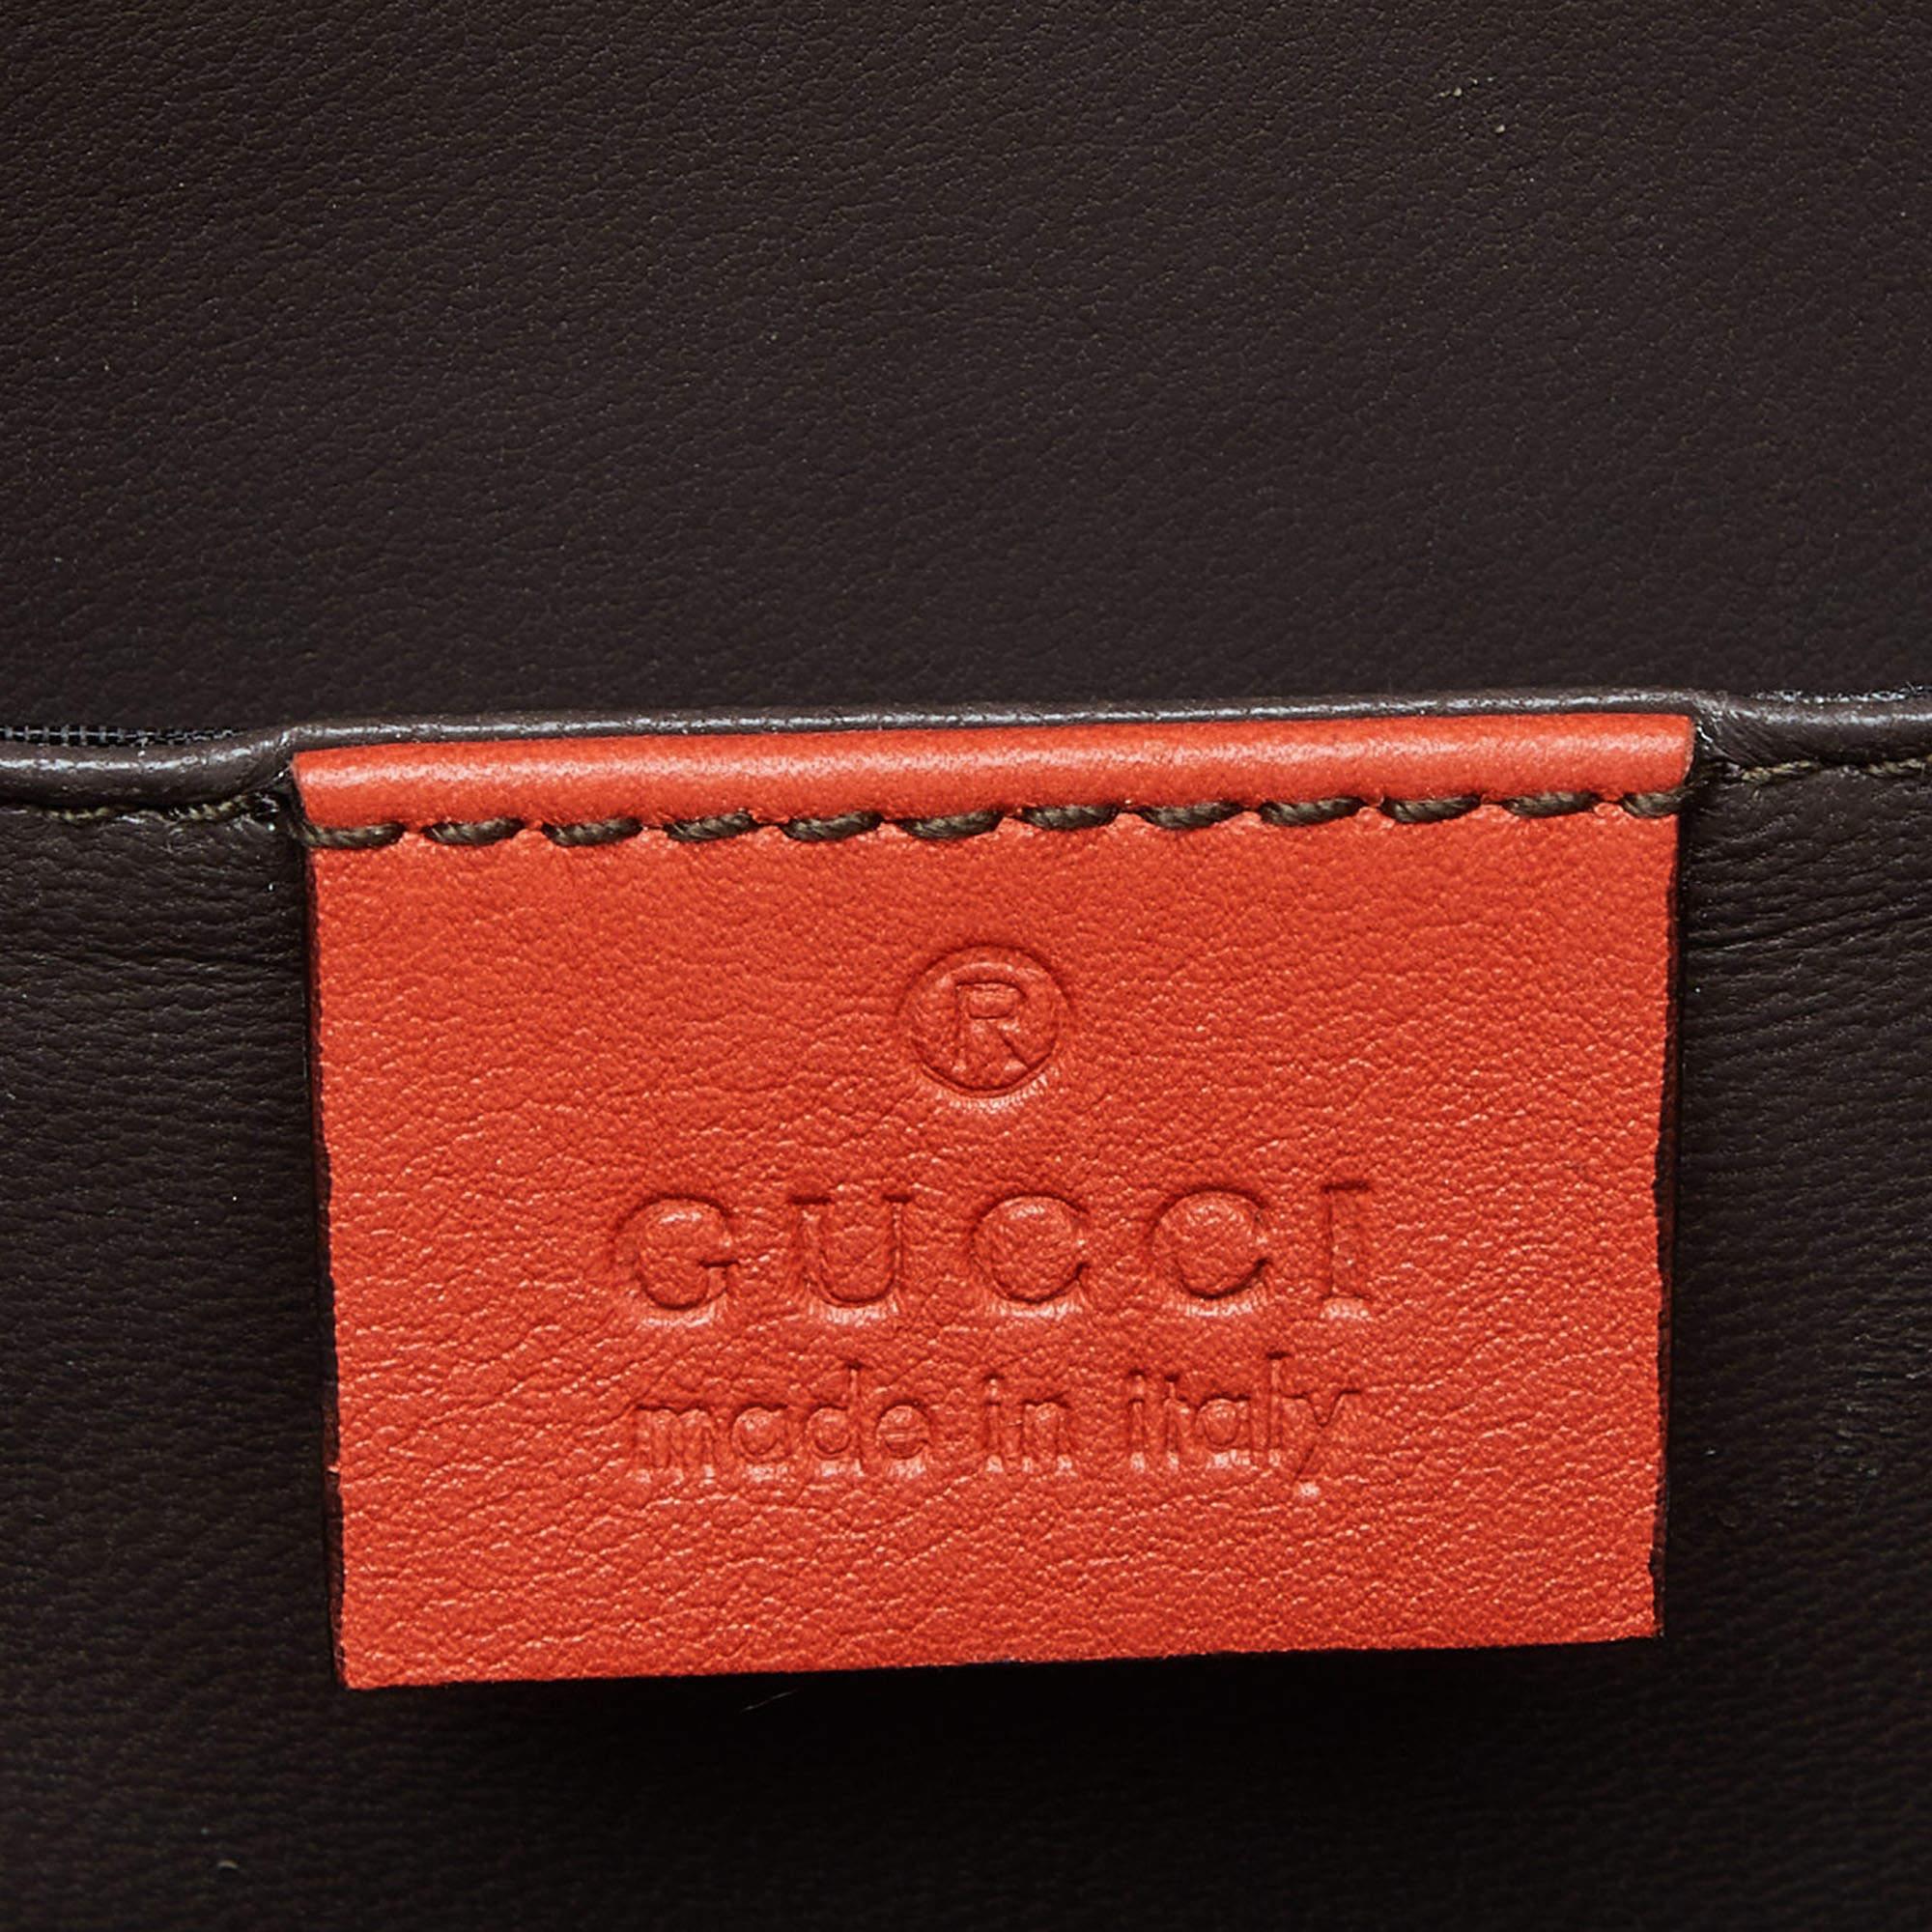 Gucci Orange Patent Leather Small Interlocking G Crossbody Bag For Sale 1